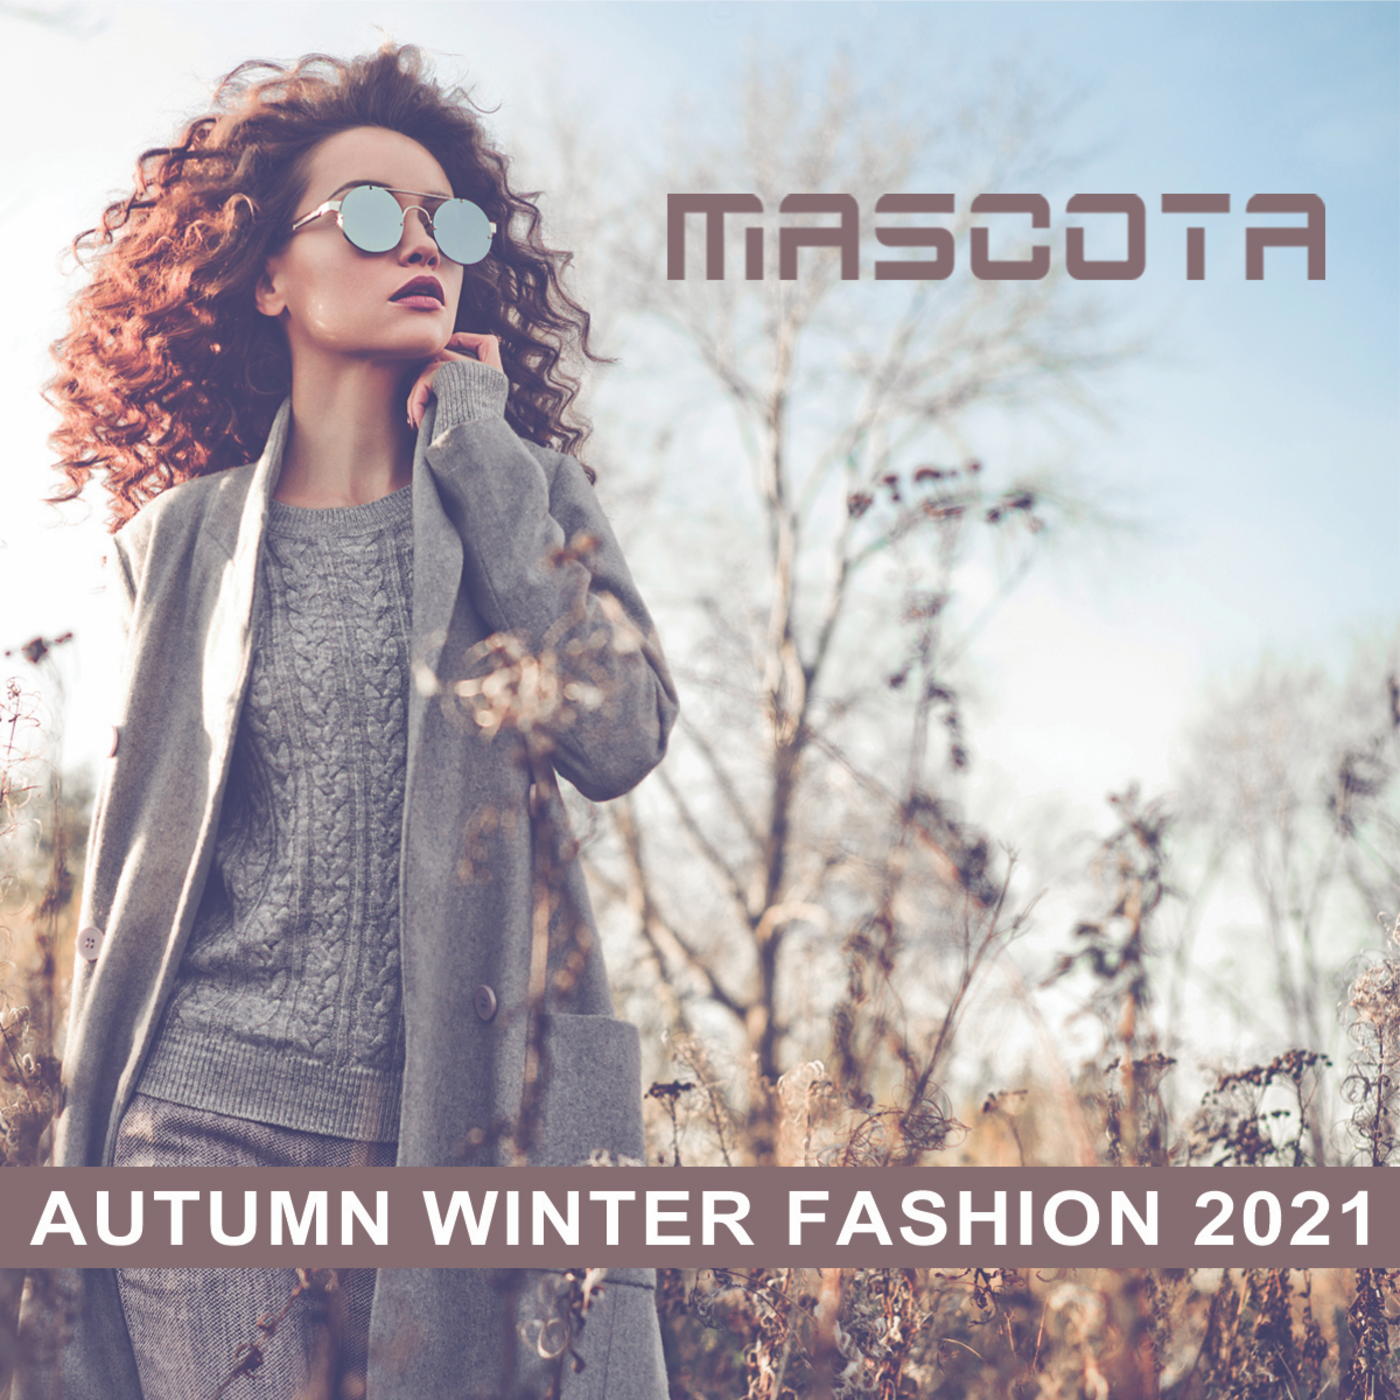 Episode 58: #58 Mascota - Autumn Winter Fashion 2021